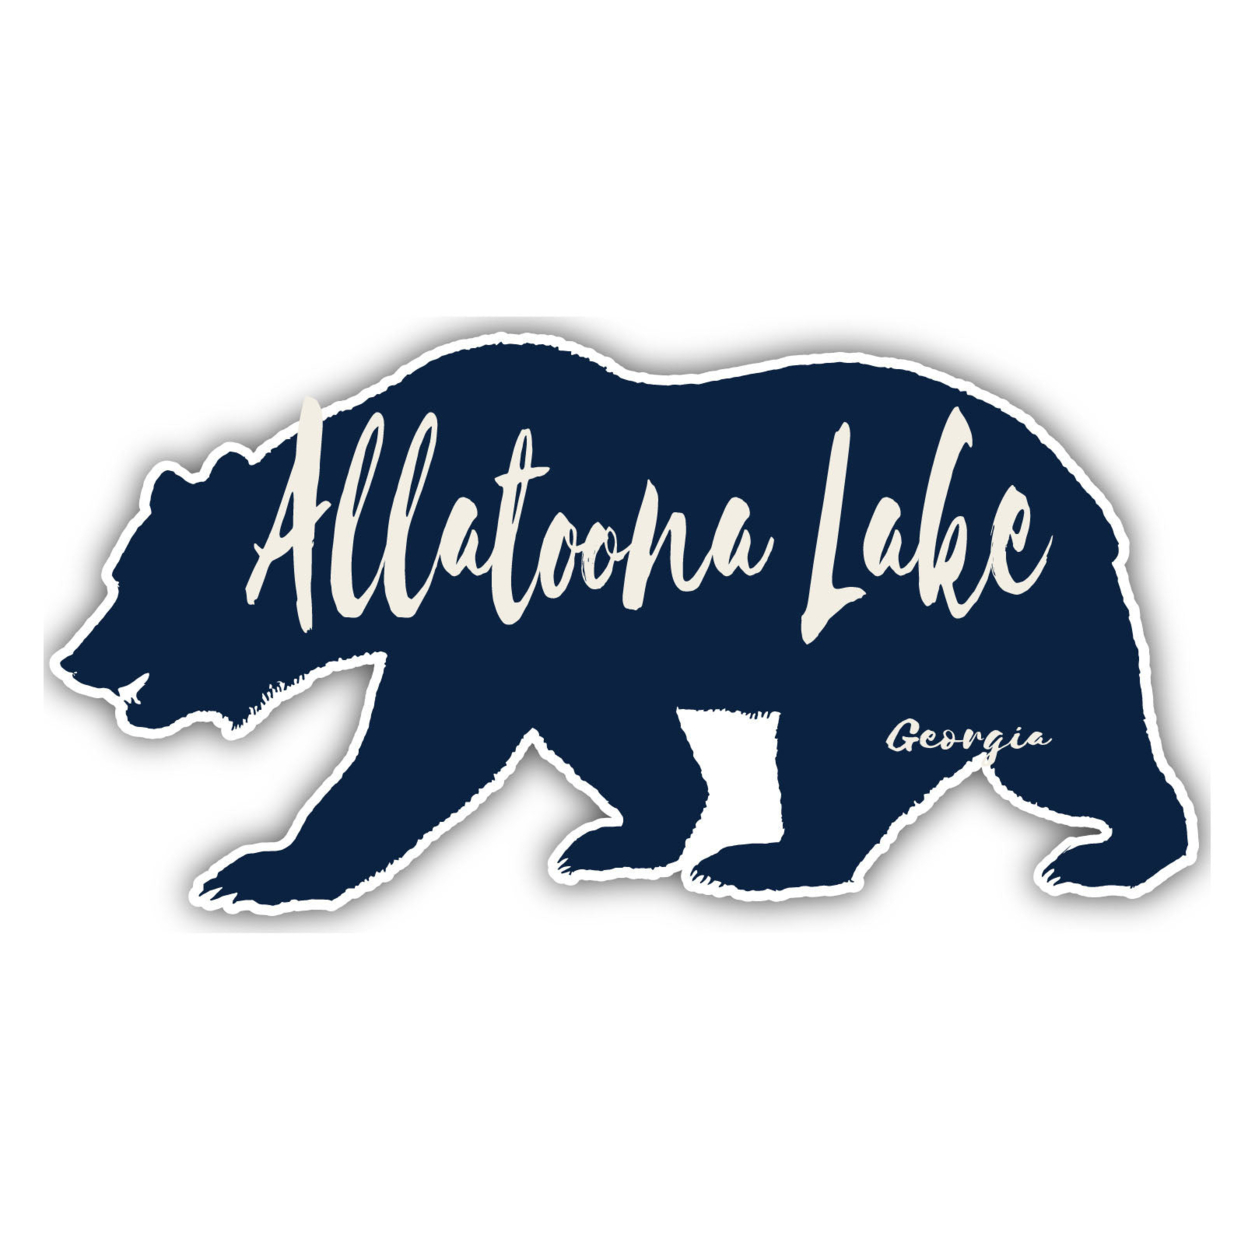 Allatoona Lake Georgia Souvenir Decorative Stickers (Choose Theme And Size) - 4-Pack, 10-Inch, Tent